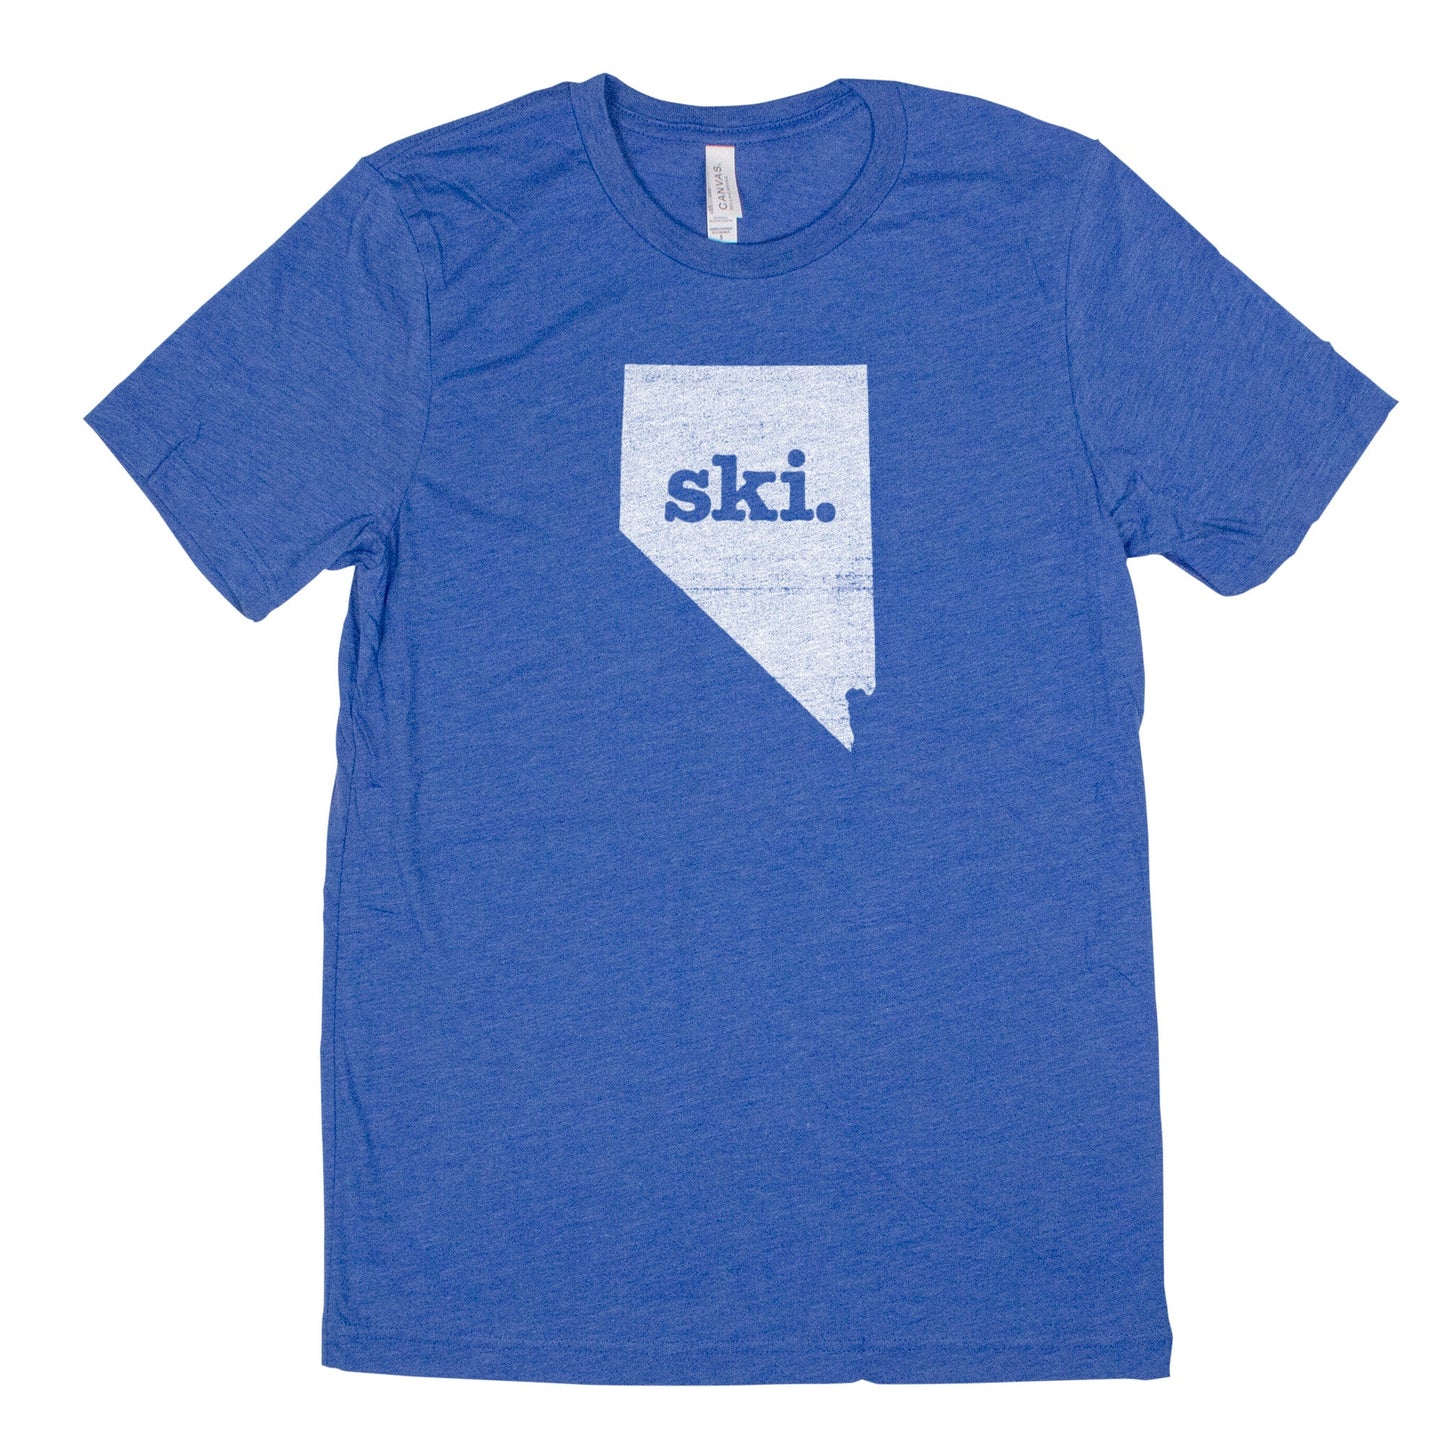 ski. Men's Unisex T-Shirt - Nevada